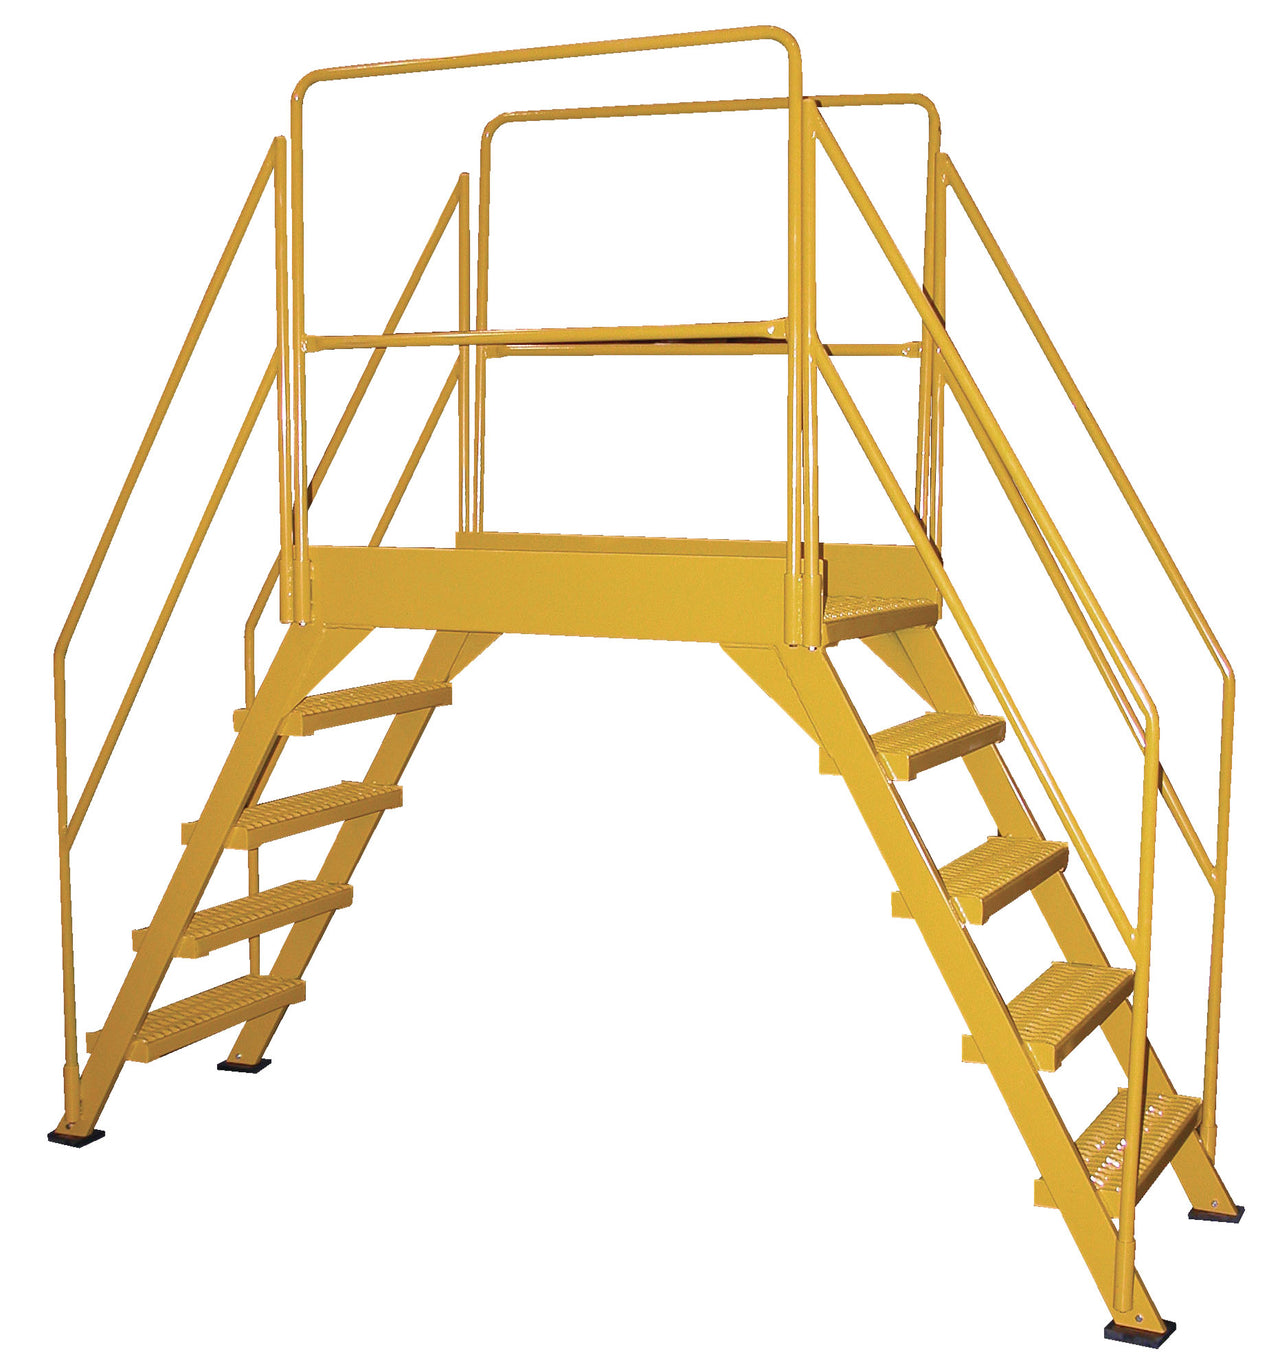 6 Step Cross-Over Ladder w/ 60" Deck